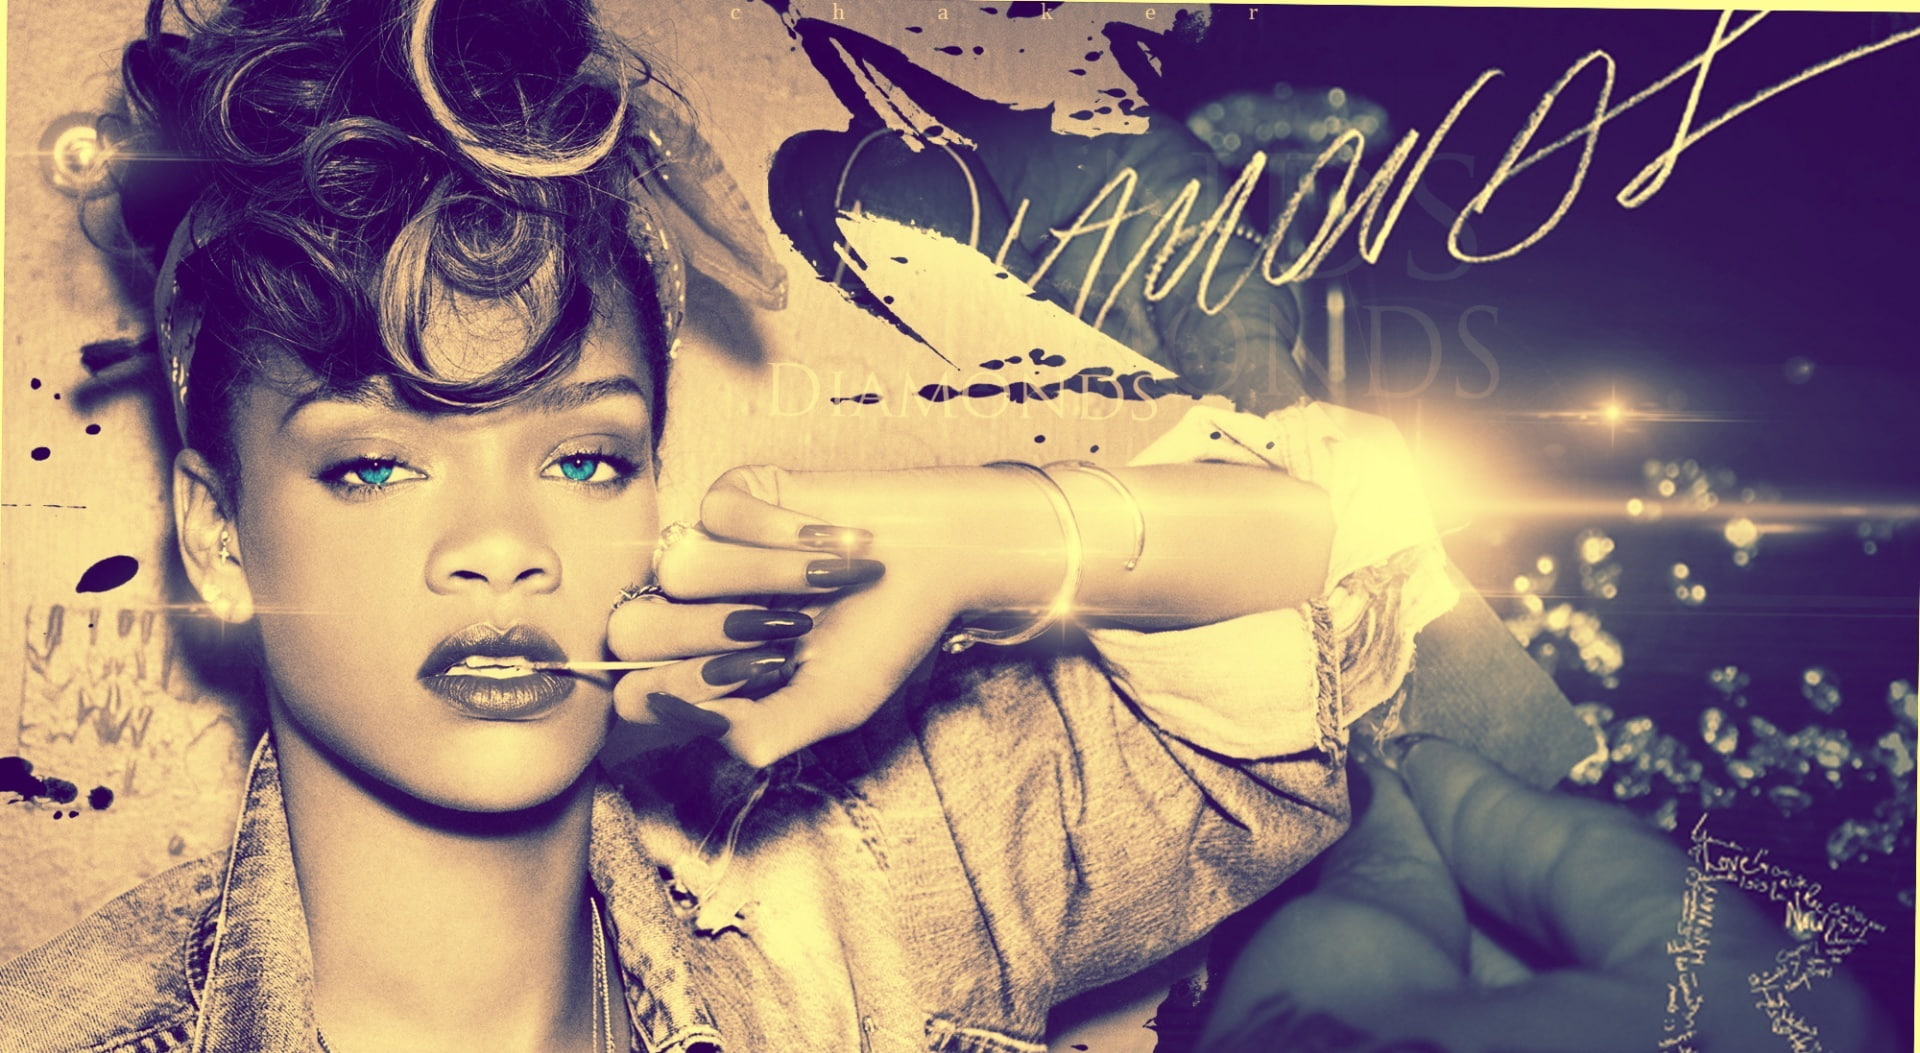 Rihanna-Diamonds, Rihanna, Music, people, real people, representation